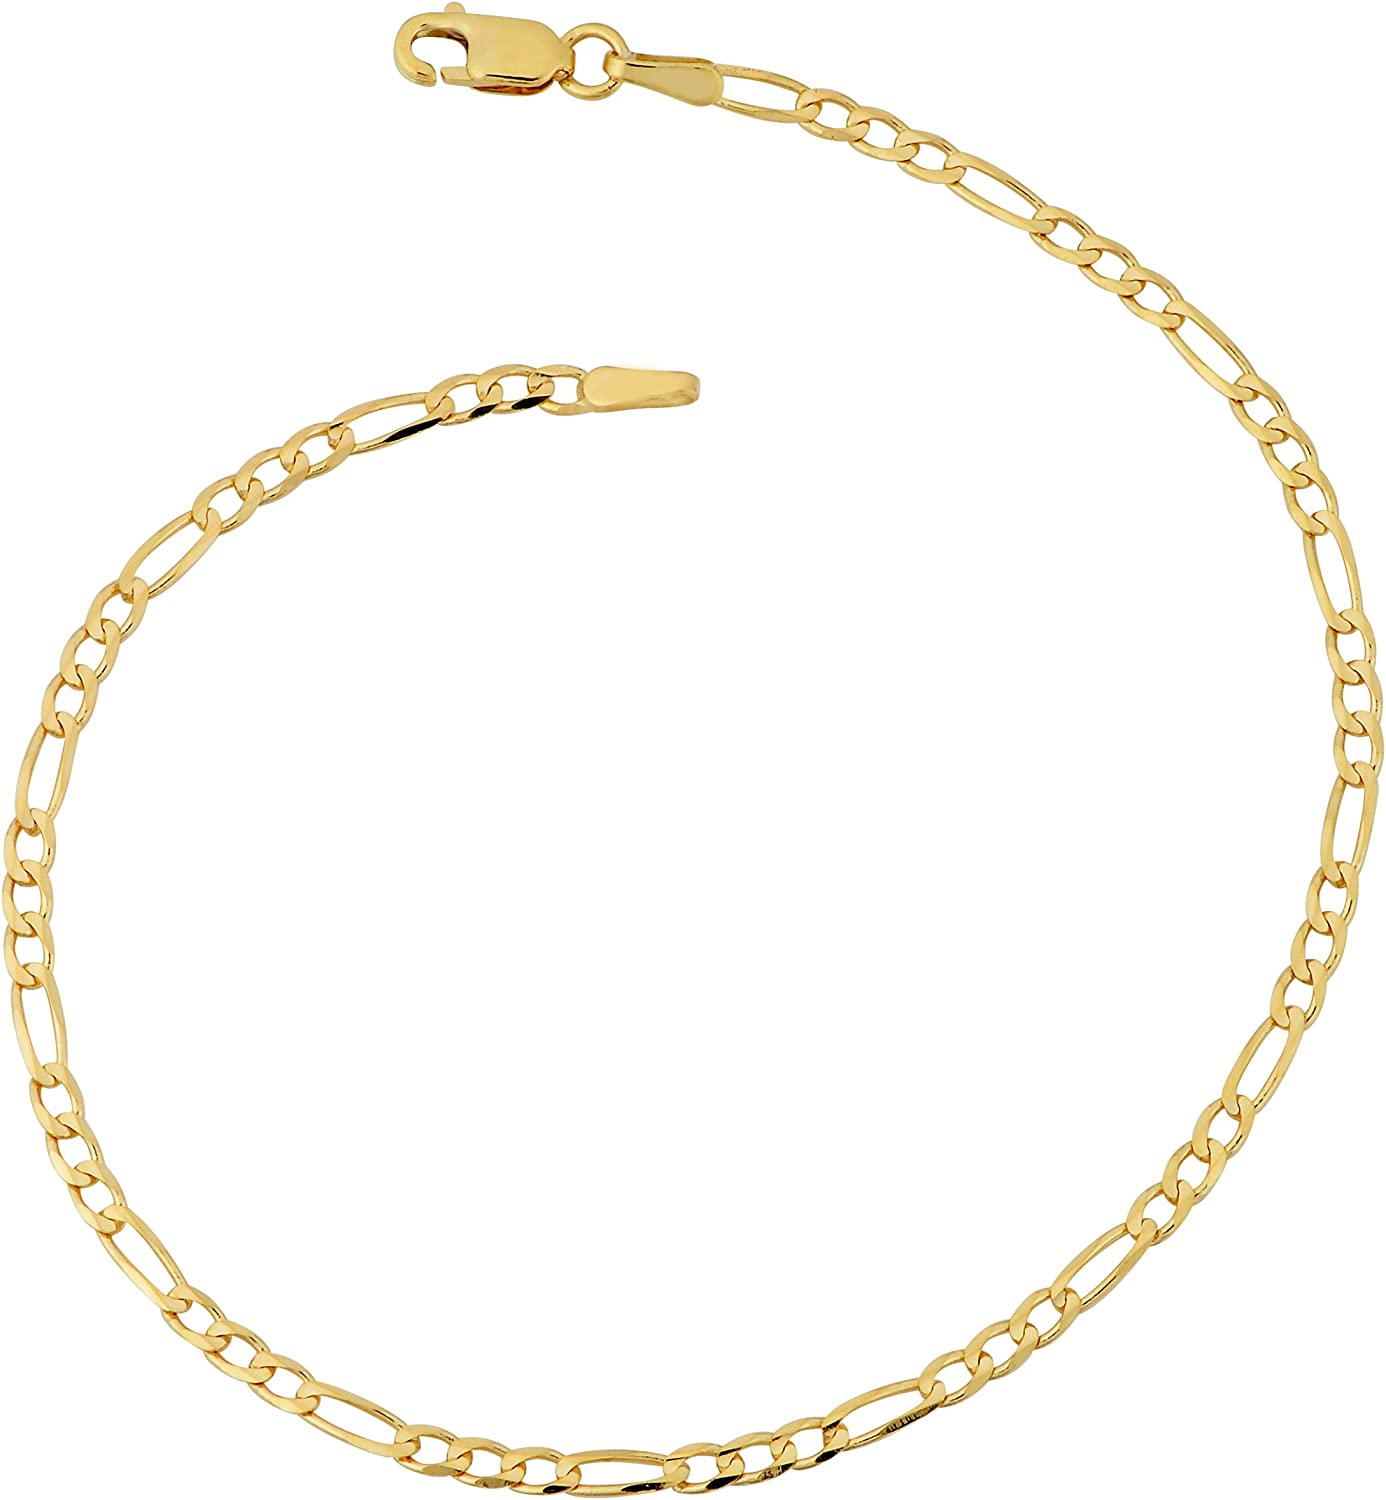 Kooljewelry 10k Yellow Gold 2.3 mm High Polish Concave Figaro Link Bracelet (7 or 8 inch)